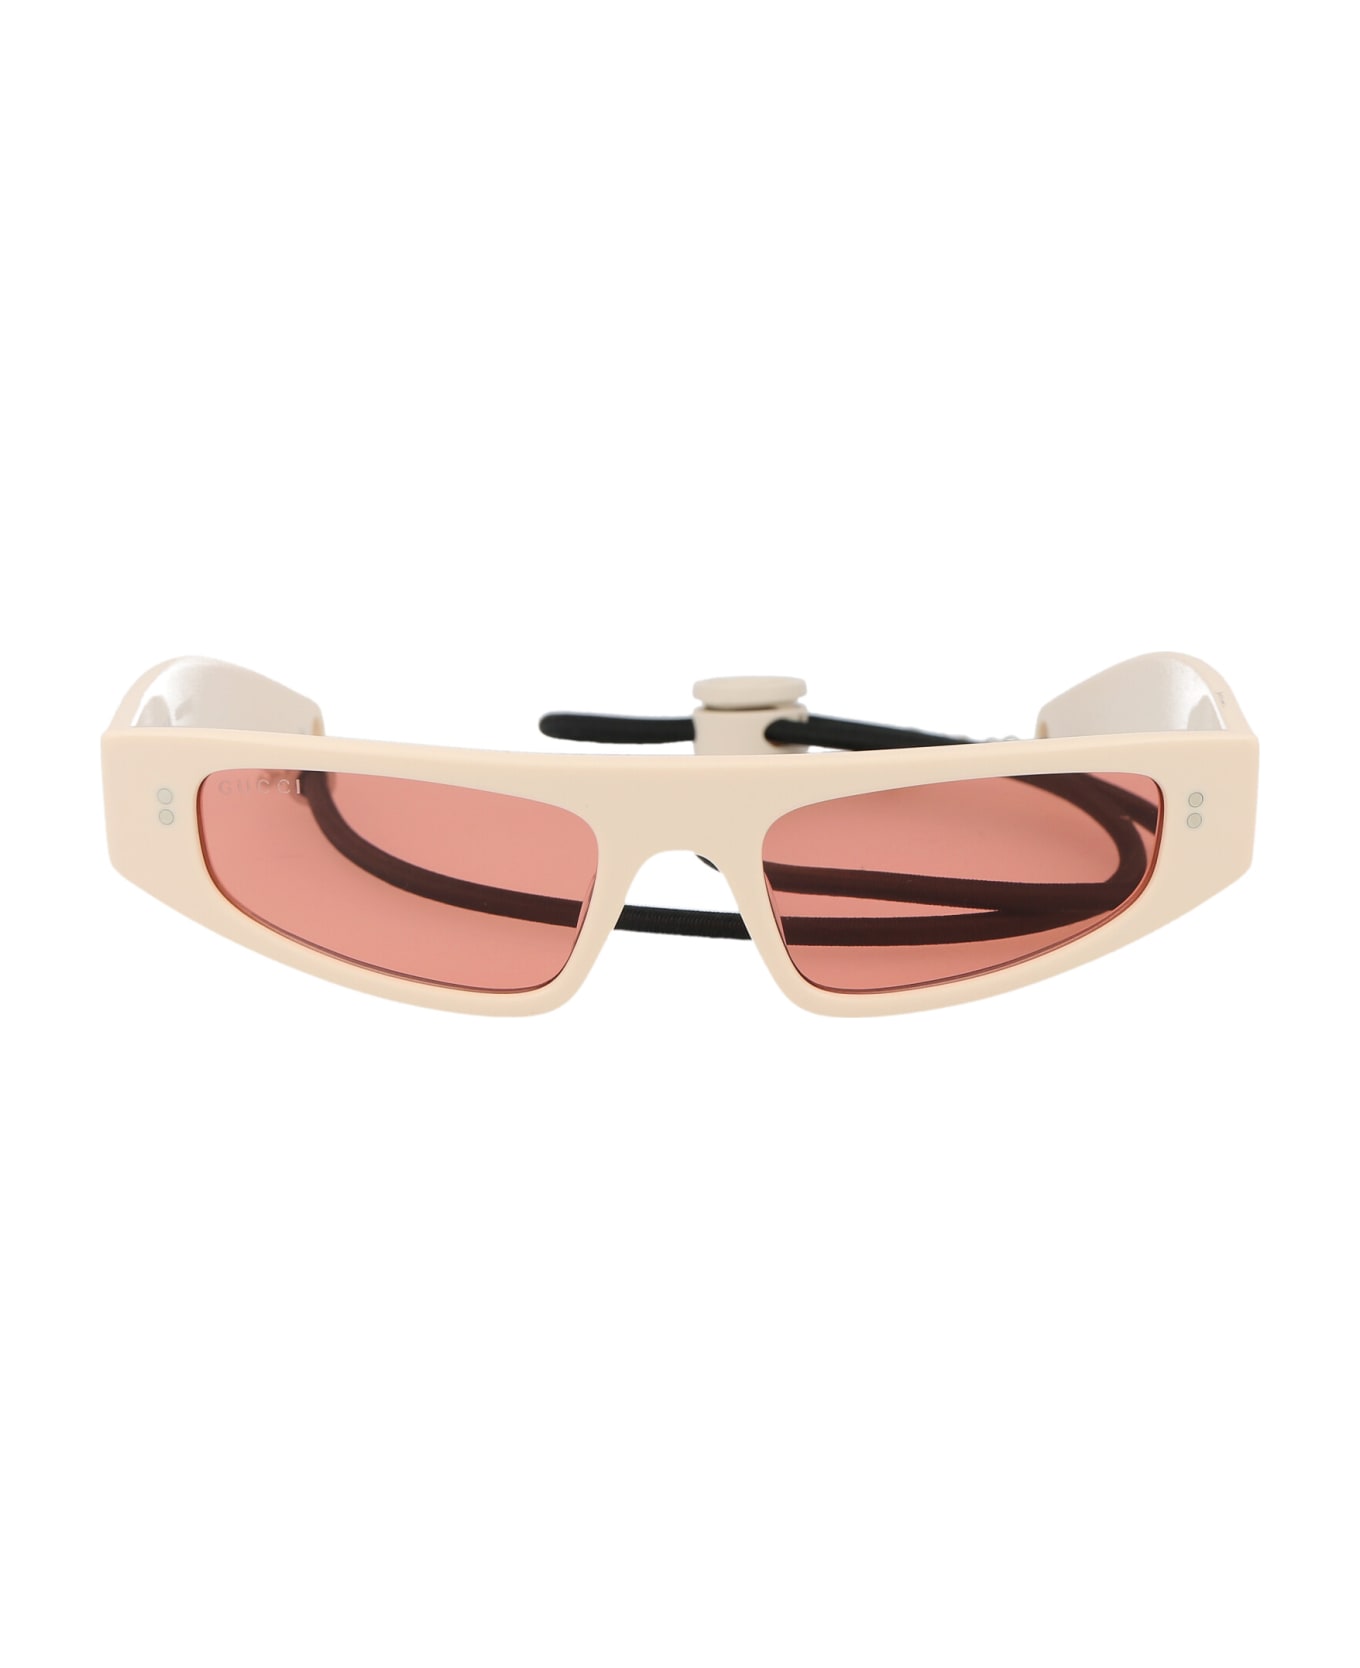 Gucci Eyewear Gg1634s Sunglasses - 007 IVORY IVORY RED